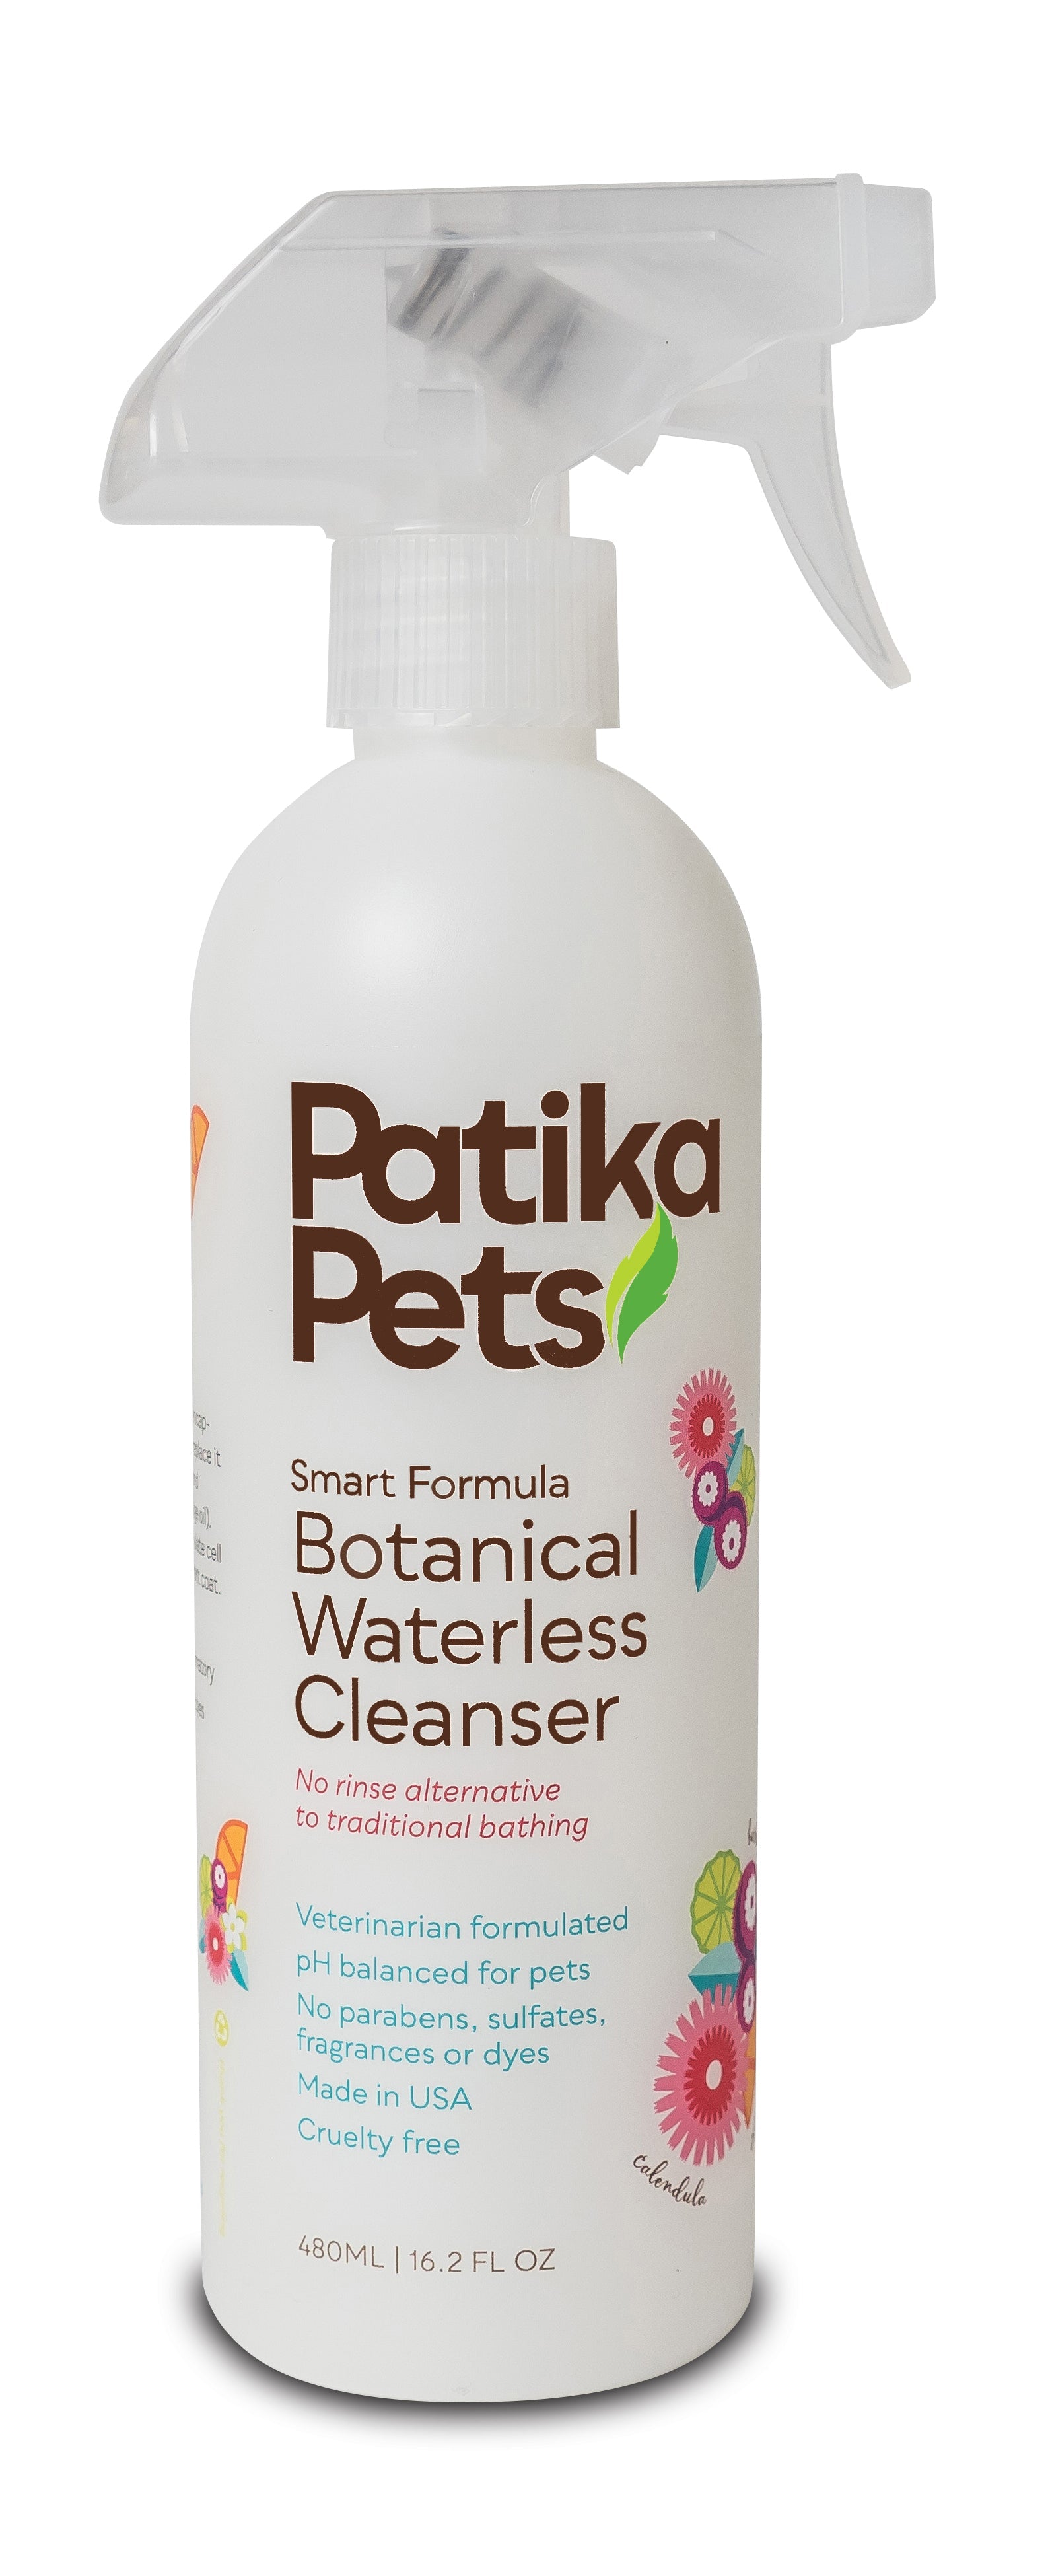 Smart Formula Botanical Waterless Cleanser, 16.2 oz